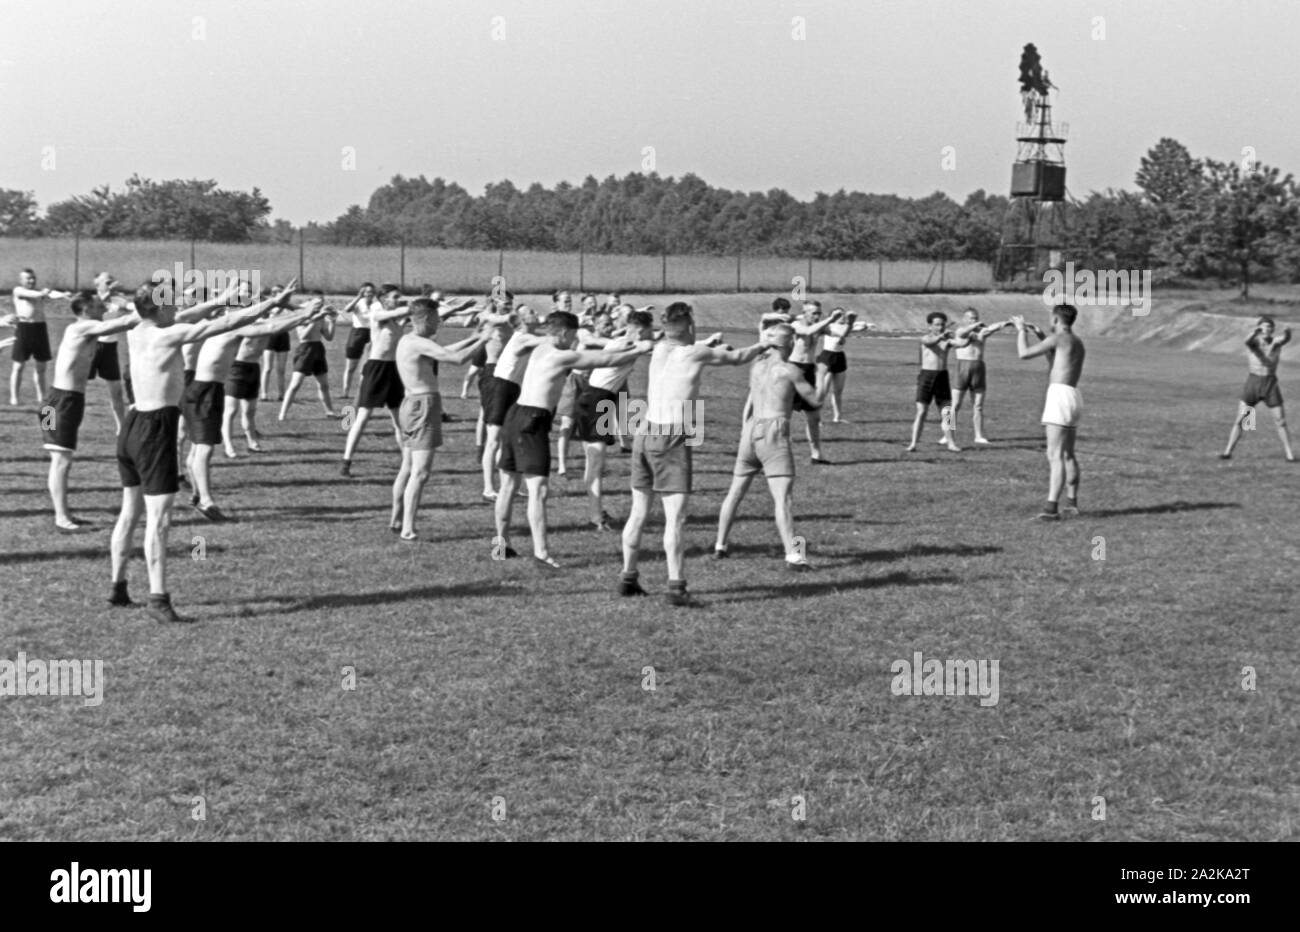 Eine Gruppe junger Männer beim Frühsport, Deutschland 1930 er Jahre. Un grou de jeunes hommes font leur exercice tôt, l'Allemagne des années 1930. Banque D'Images